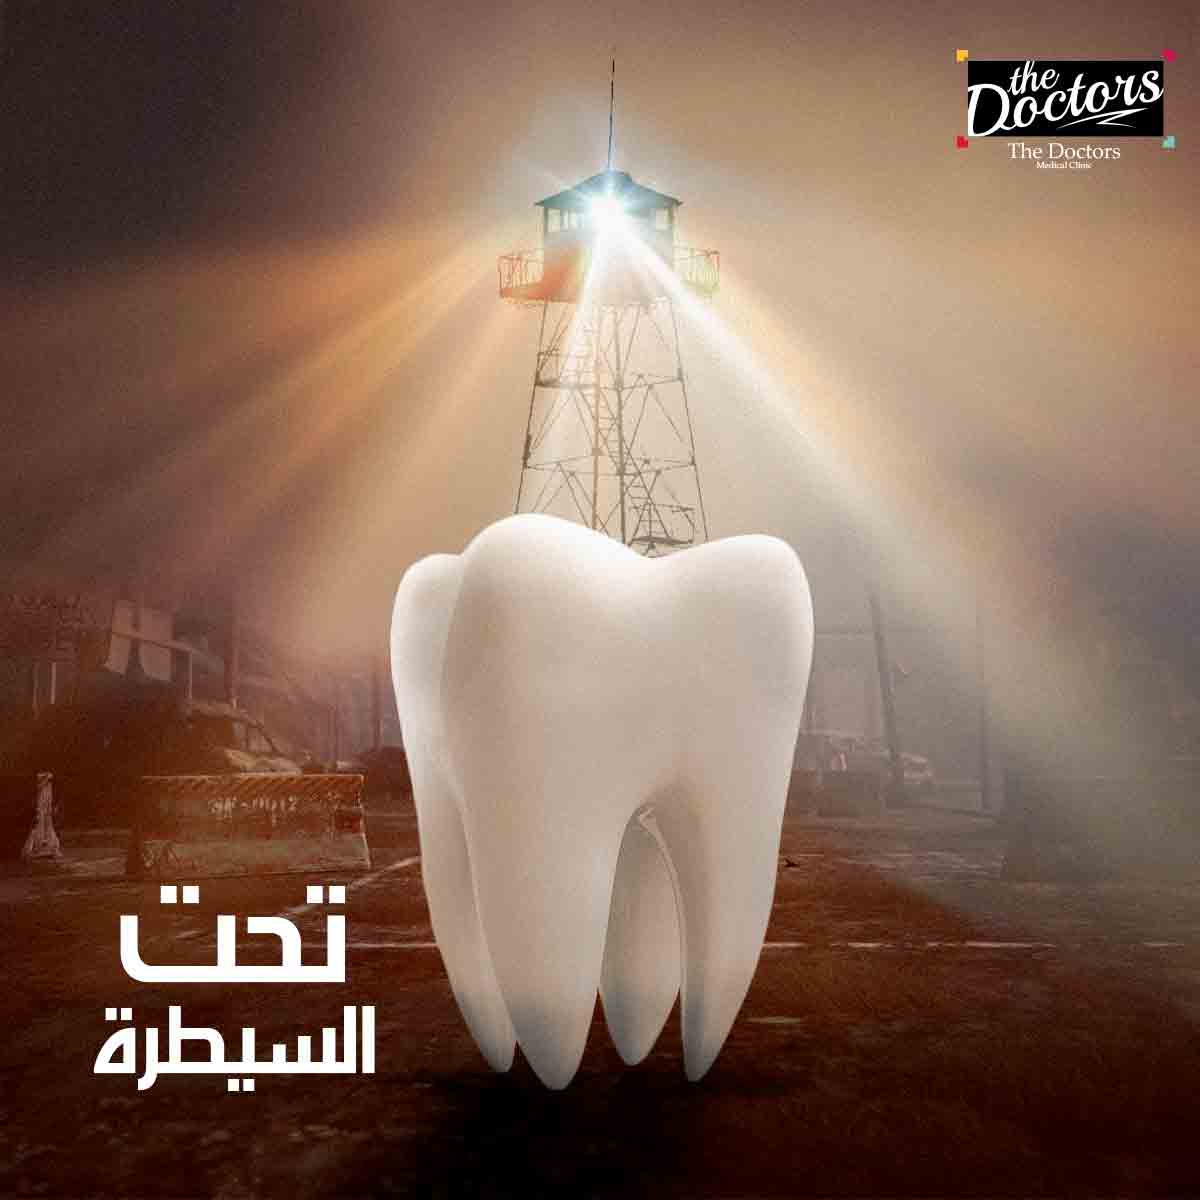 Dental implant awareness